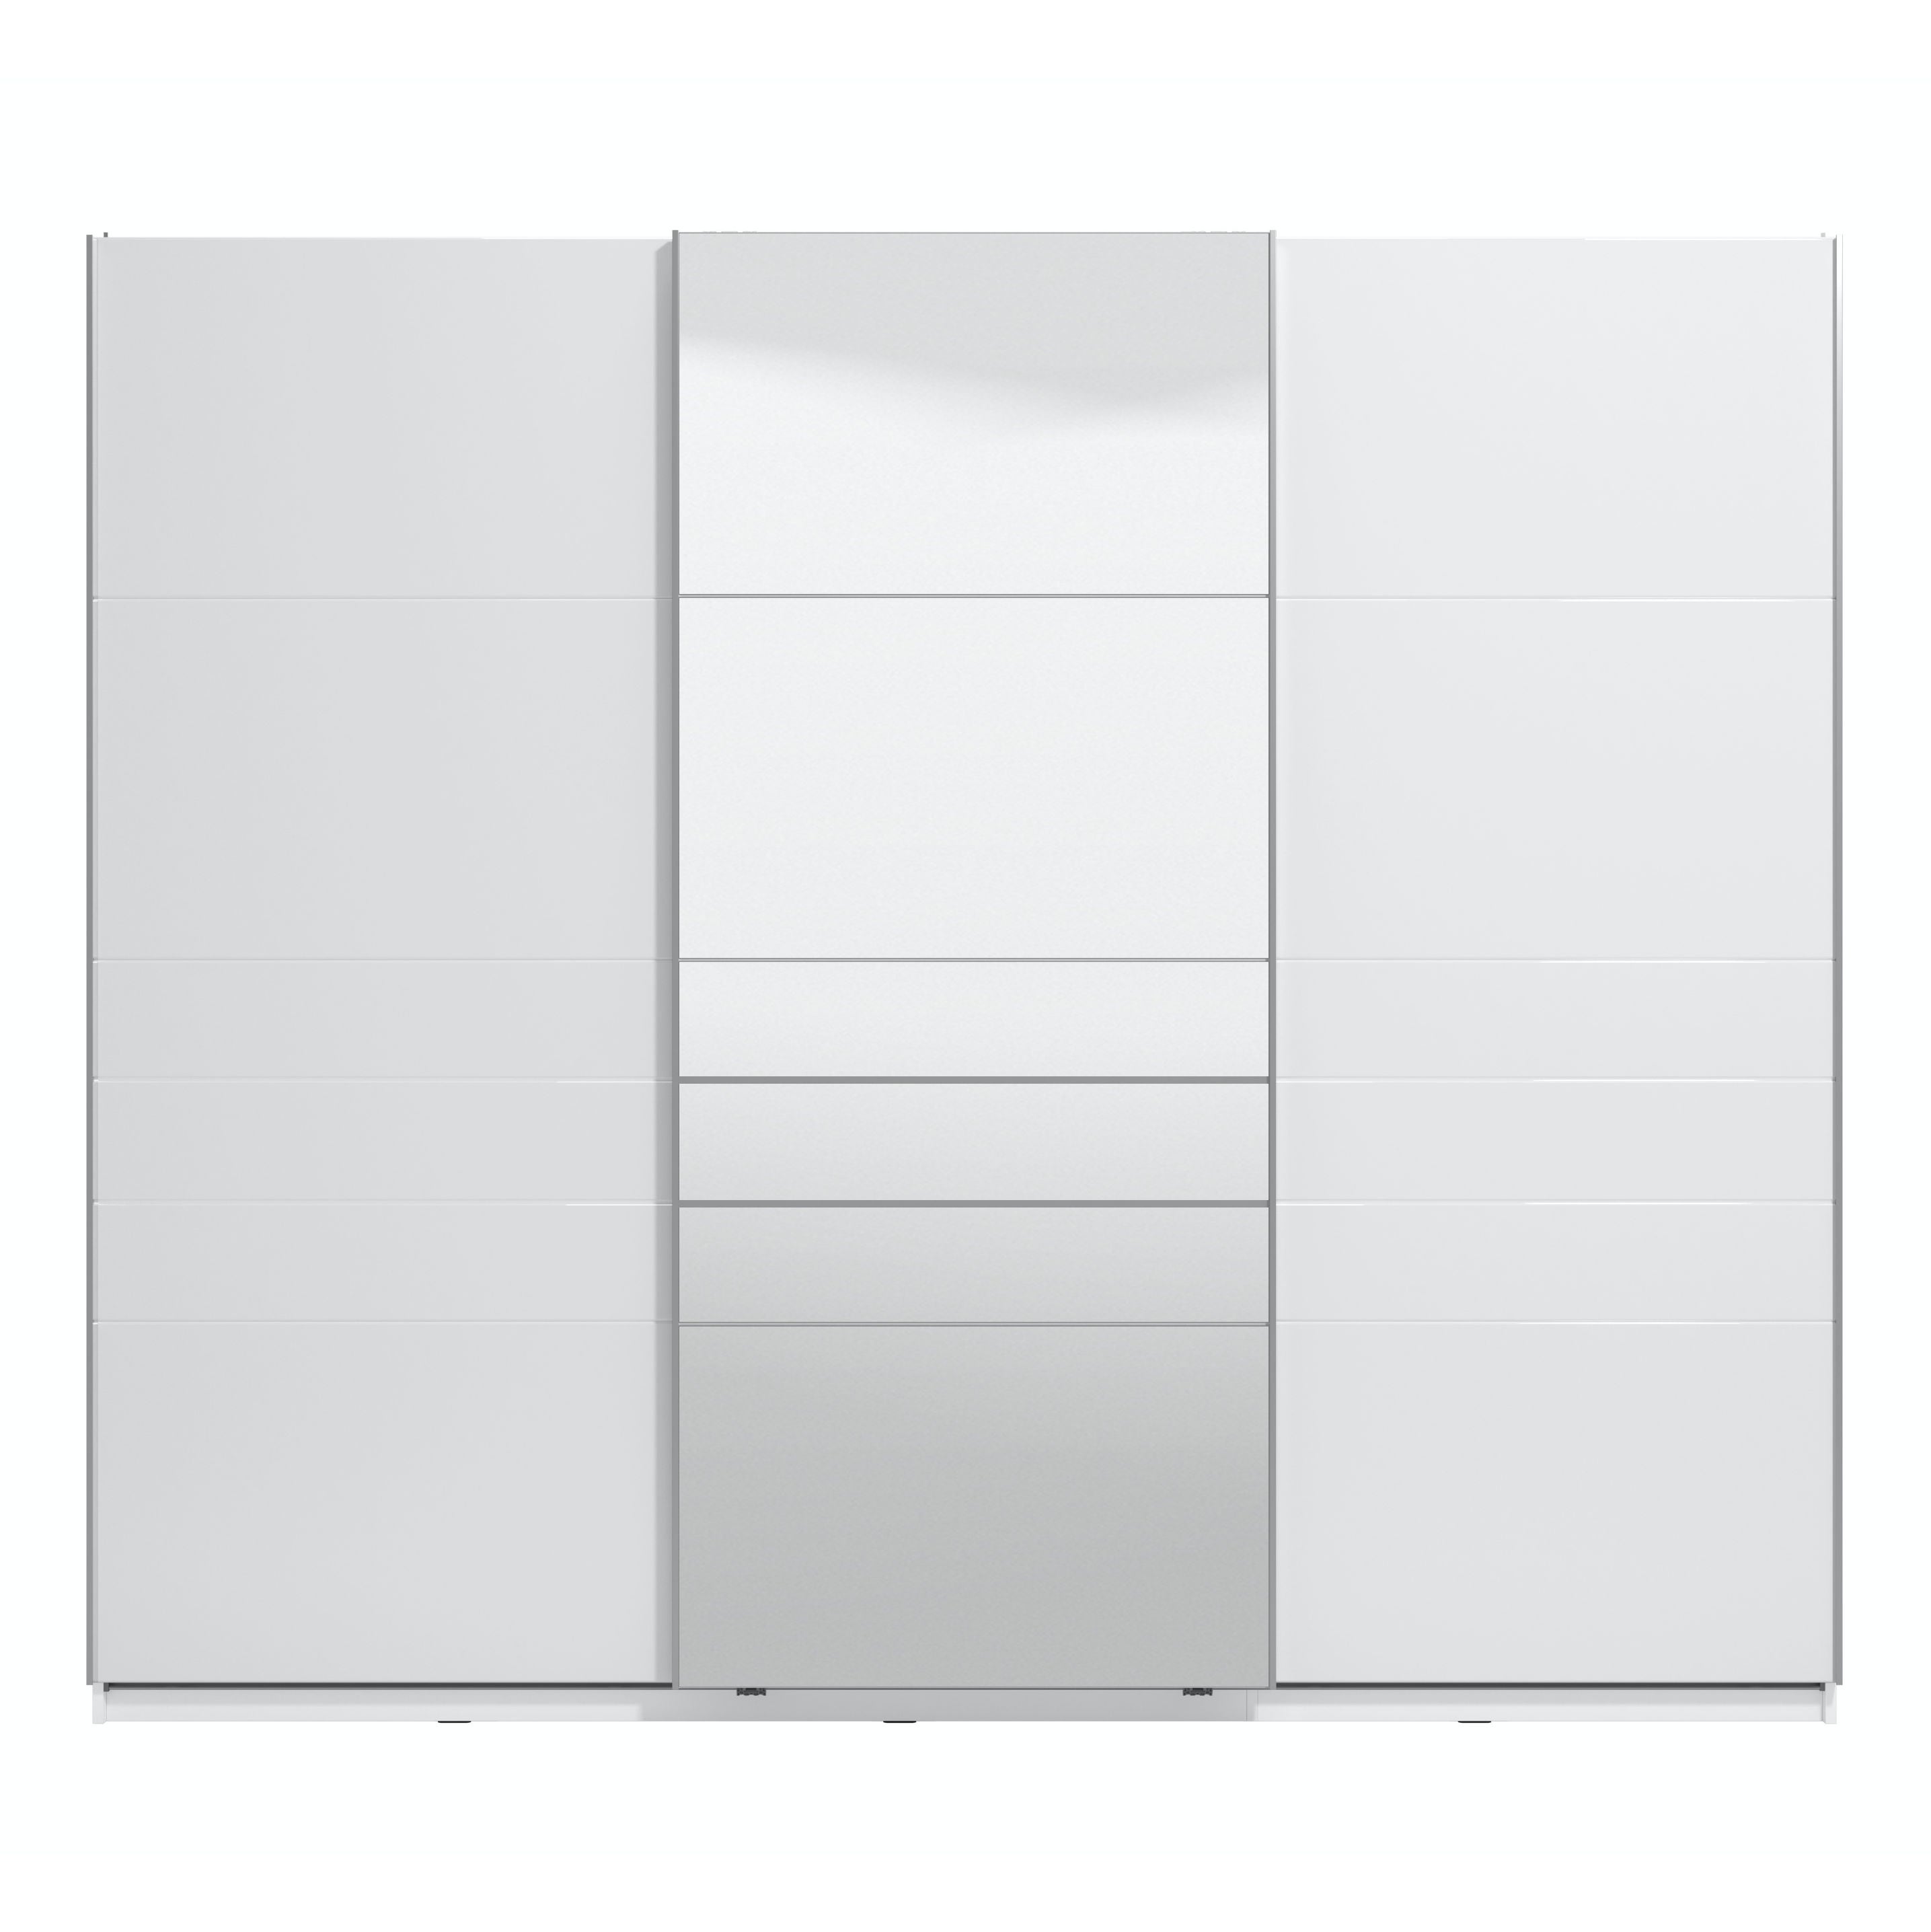 Dulap dormitor Mondego 270, alb mat + folie lucioasa alba, 3 usi glisante, cu oglinda, 262.5 x 65.5 x 224 cm, 9C